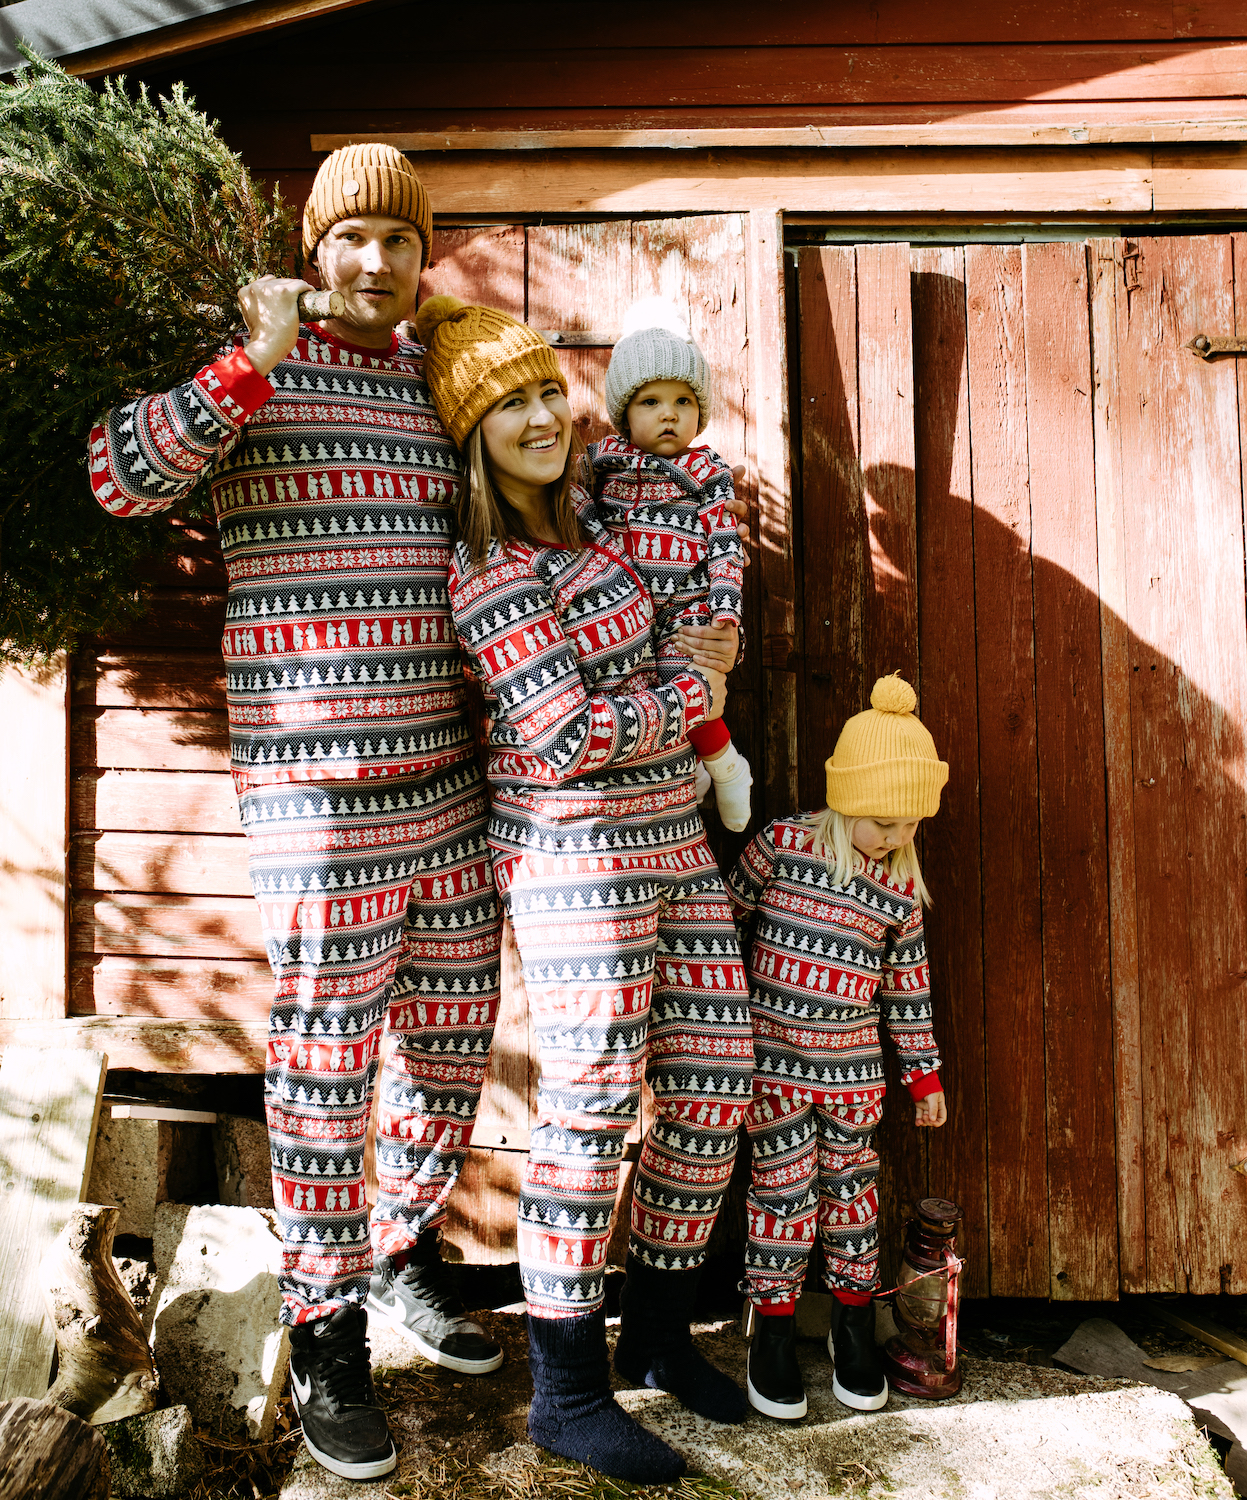 Spend the holiday season in Martinex' matching family pyjamas